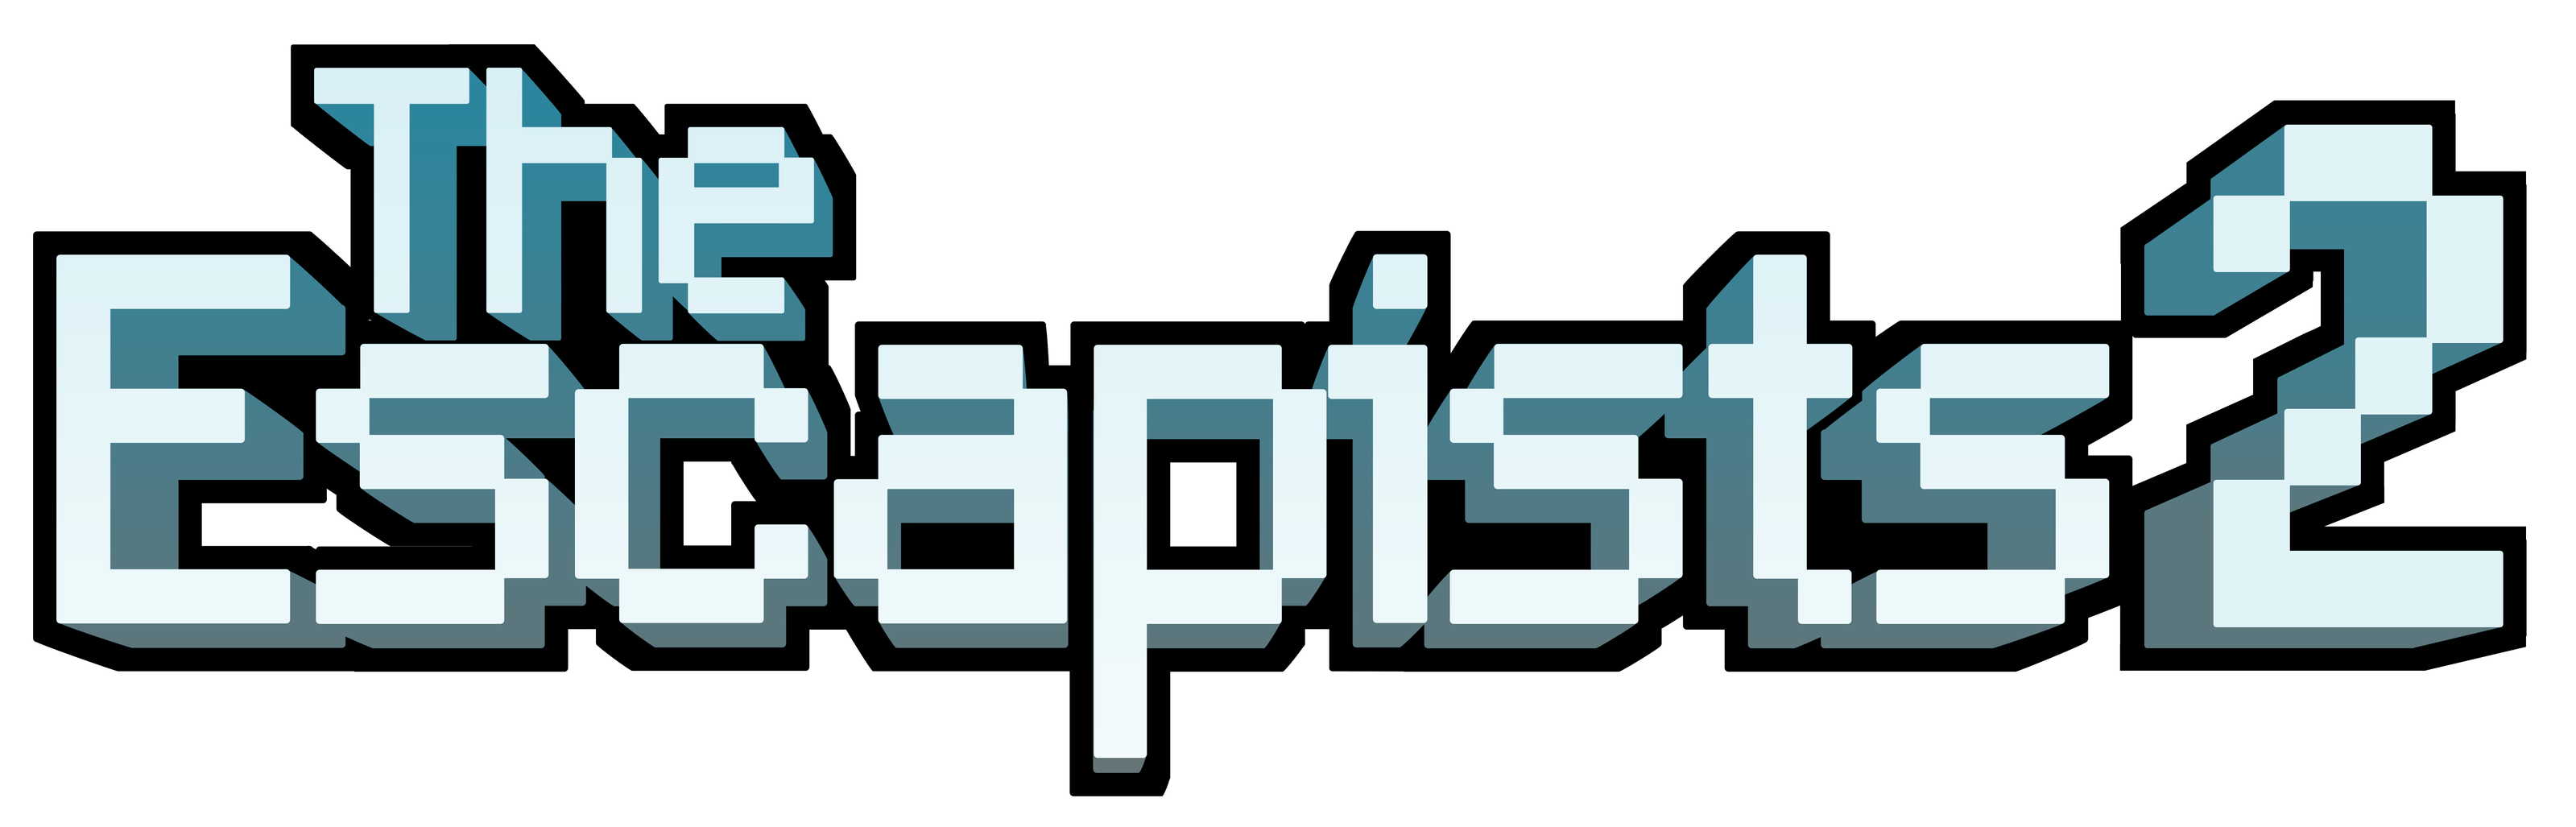 Escaptist Logo - The Escapists 2 Release Date - GameOctane